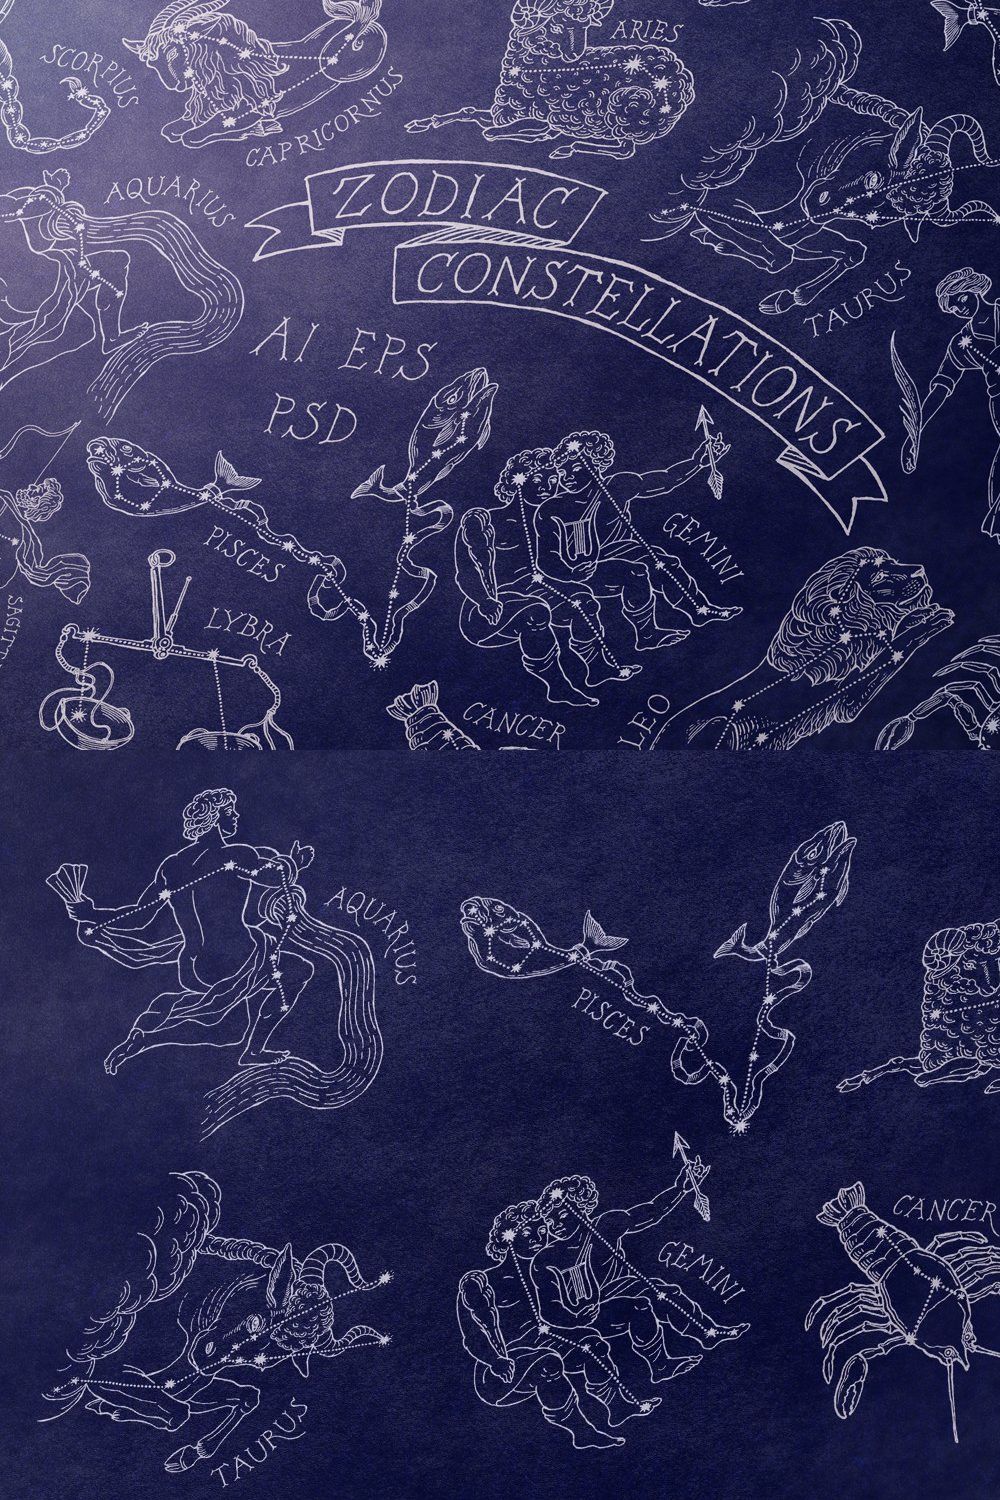 Zodiac Constellations set & Pattern pinterest preview image.